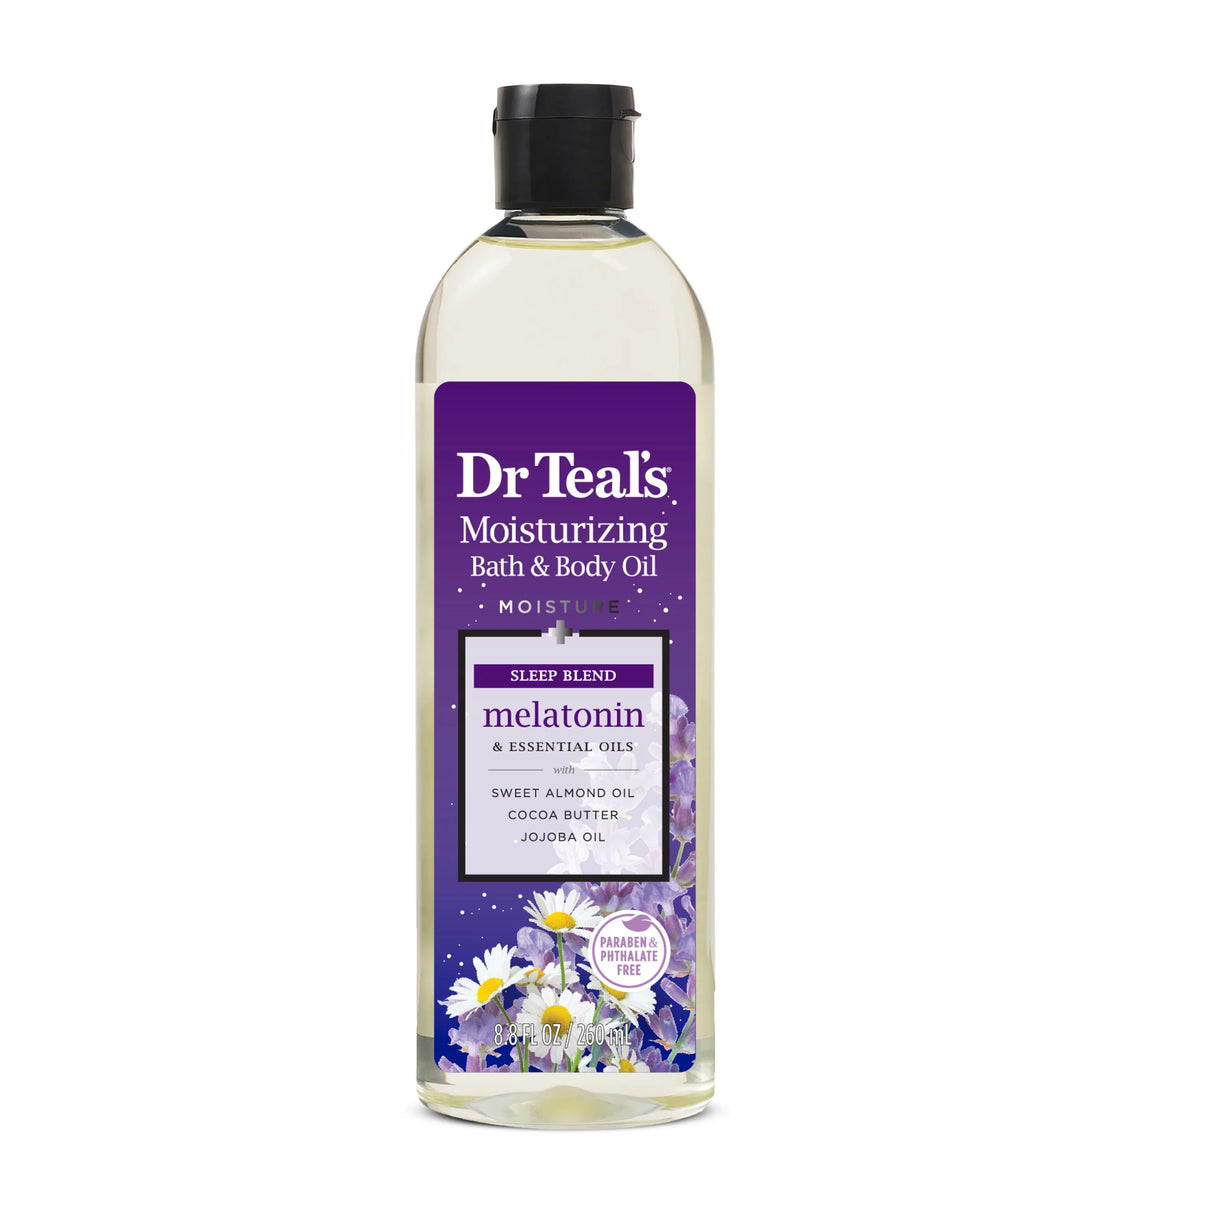 Dr Teal's Moisturizing Bath & Body Oil with Melatonin & Essential Oils (8.8 oz.)